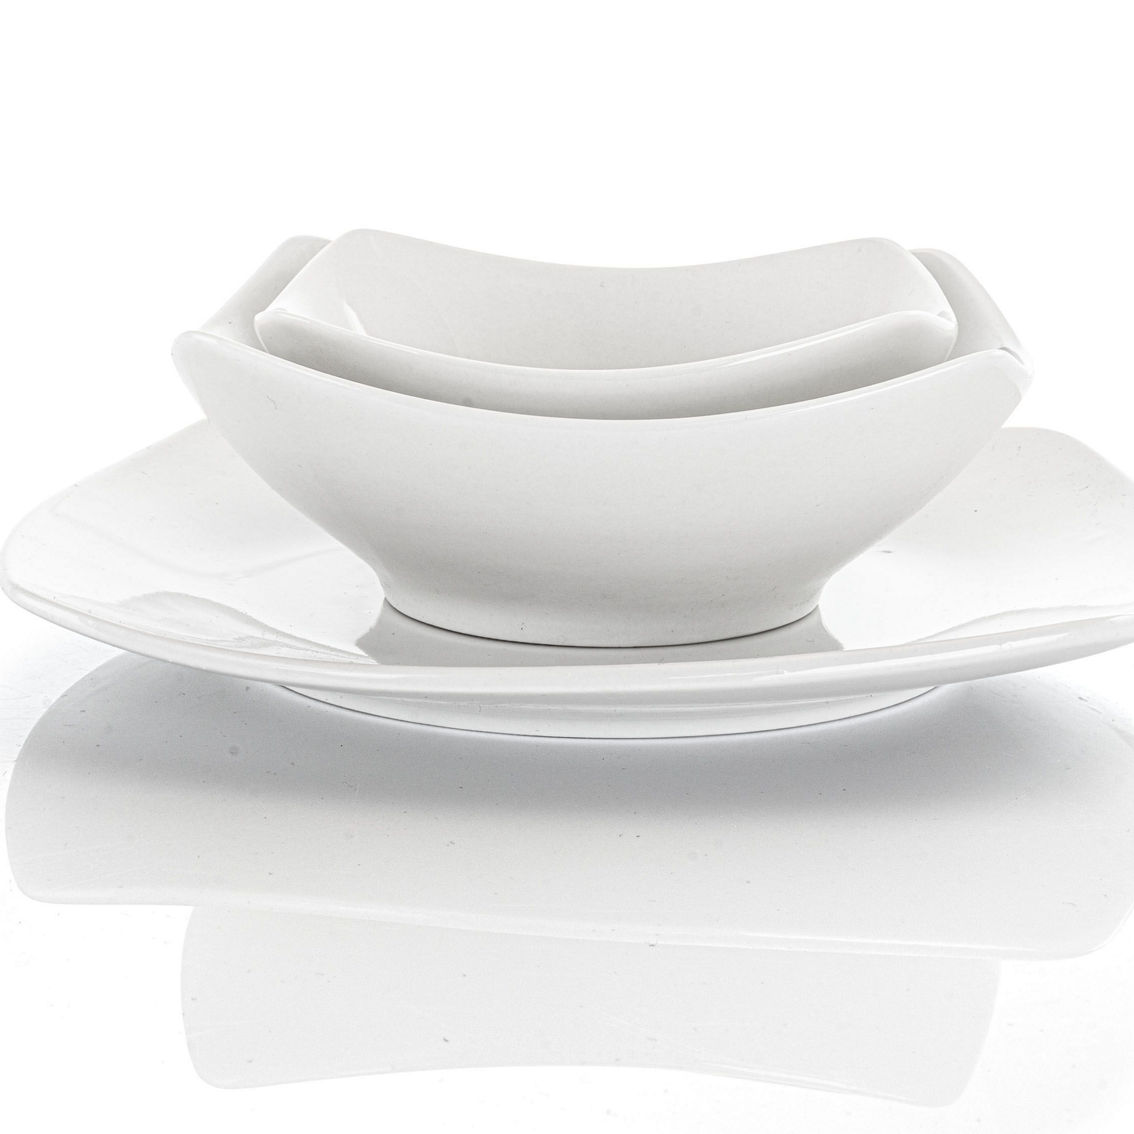 Gibson All U Need 48 Piece Ceramic Dinnerware Combo Set in White - Image 3 of 5